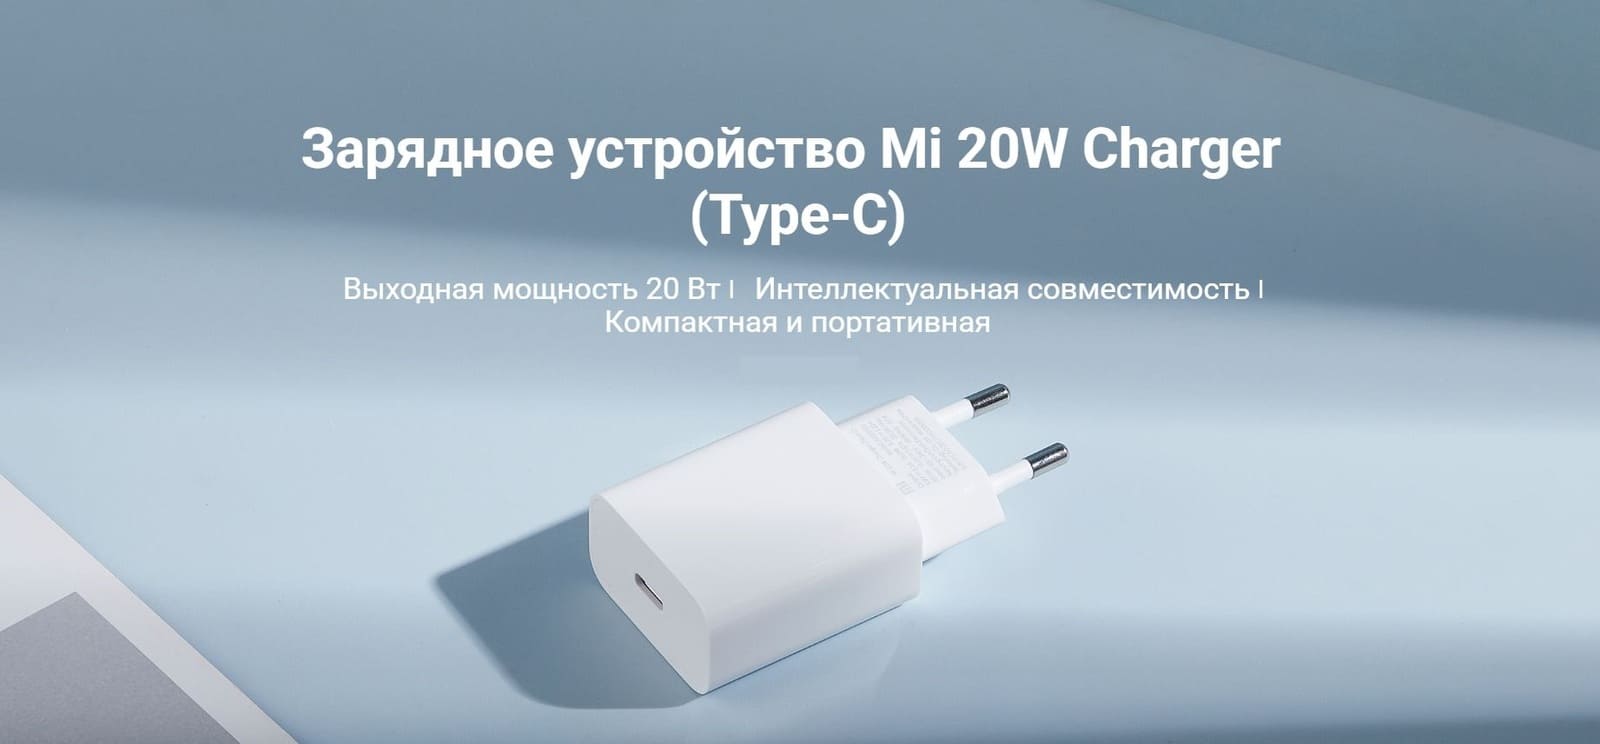 Сетевое зарядное устройство Xiaomi Mi charger.